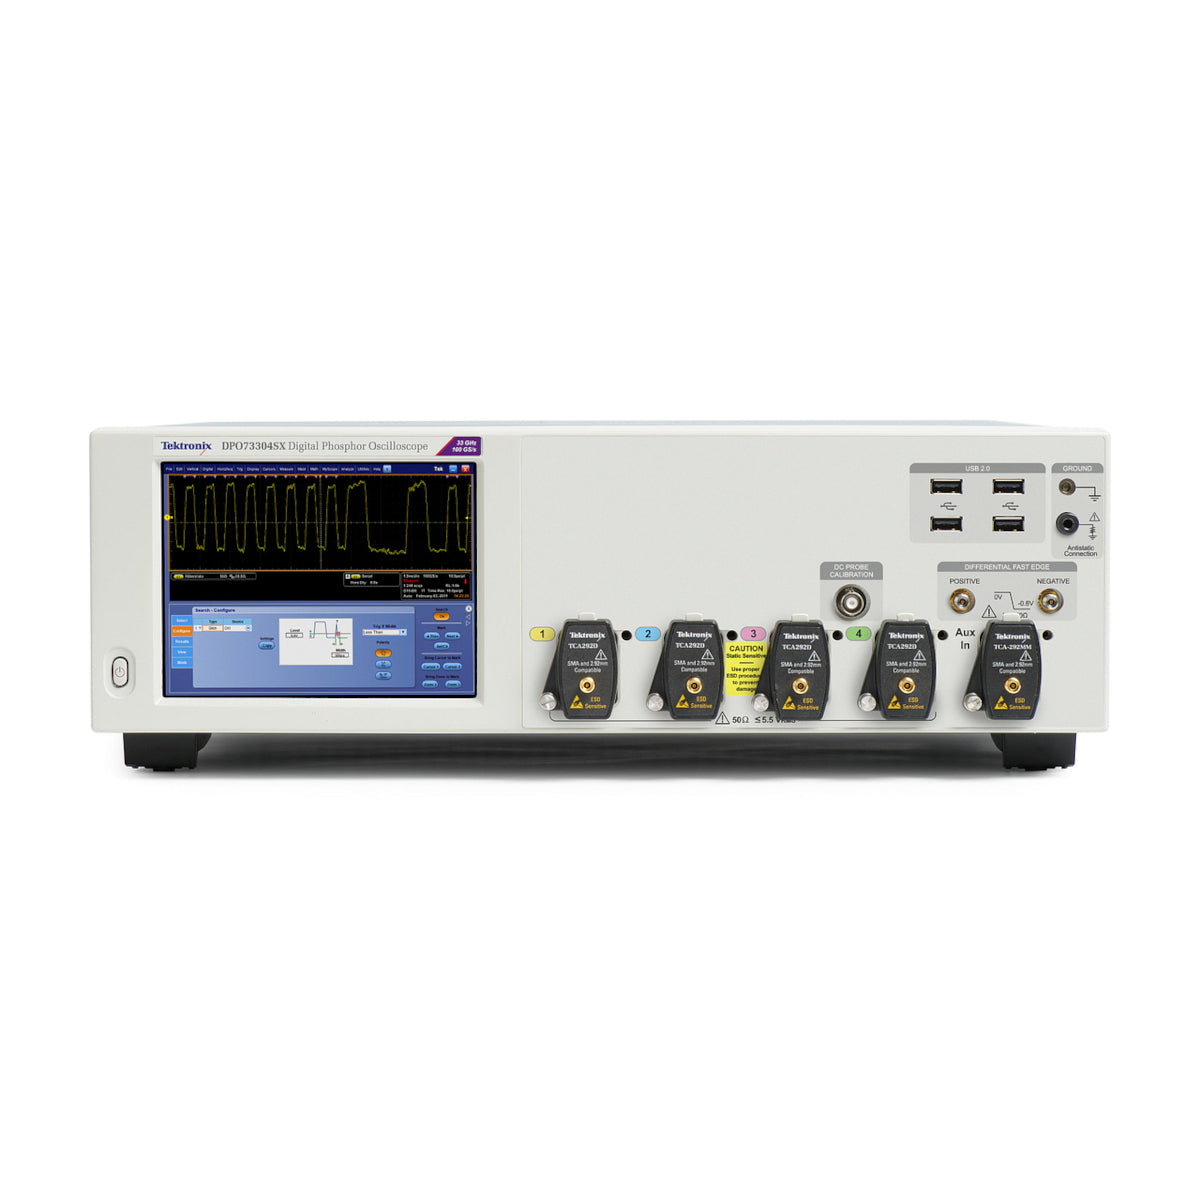 Tektronix DPS75004SX Scalable Performance Oscilloscope